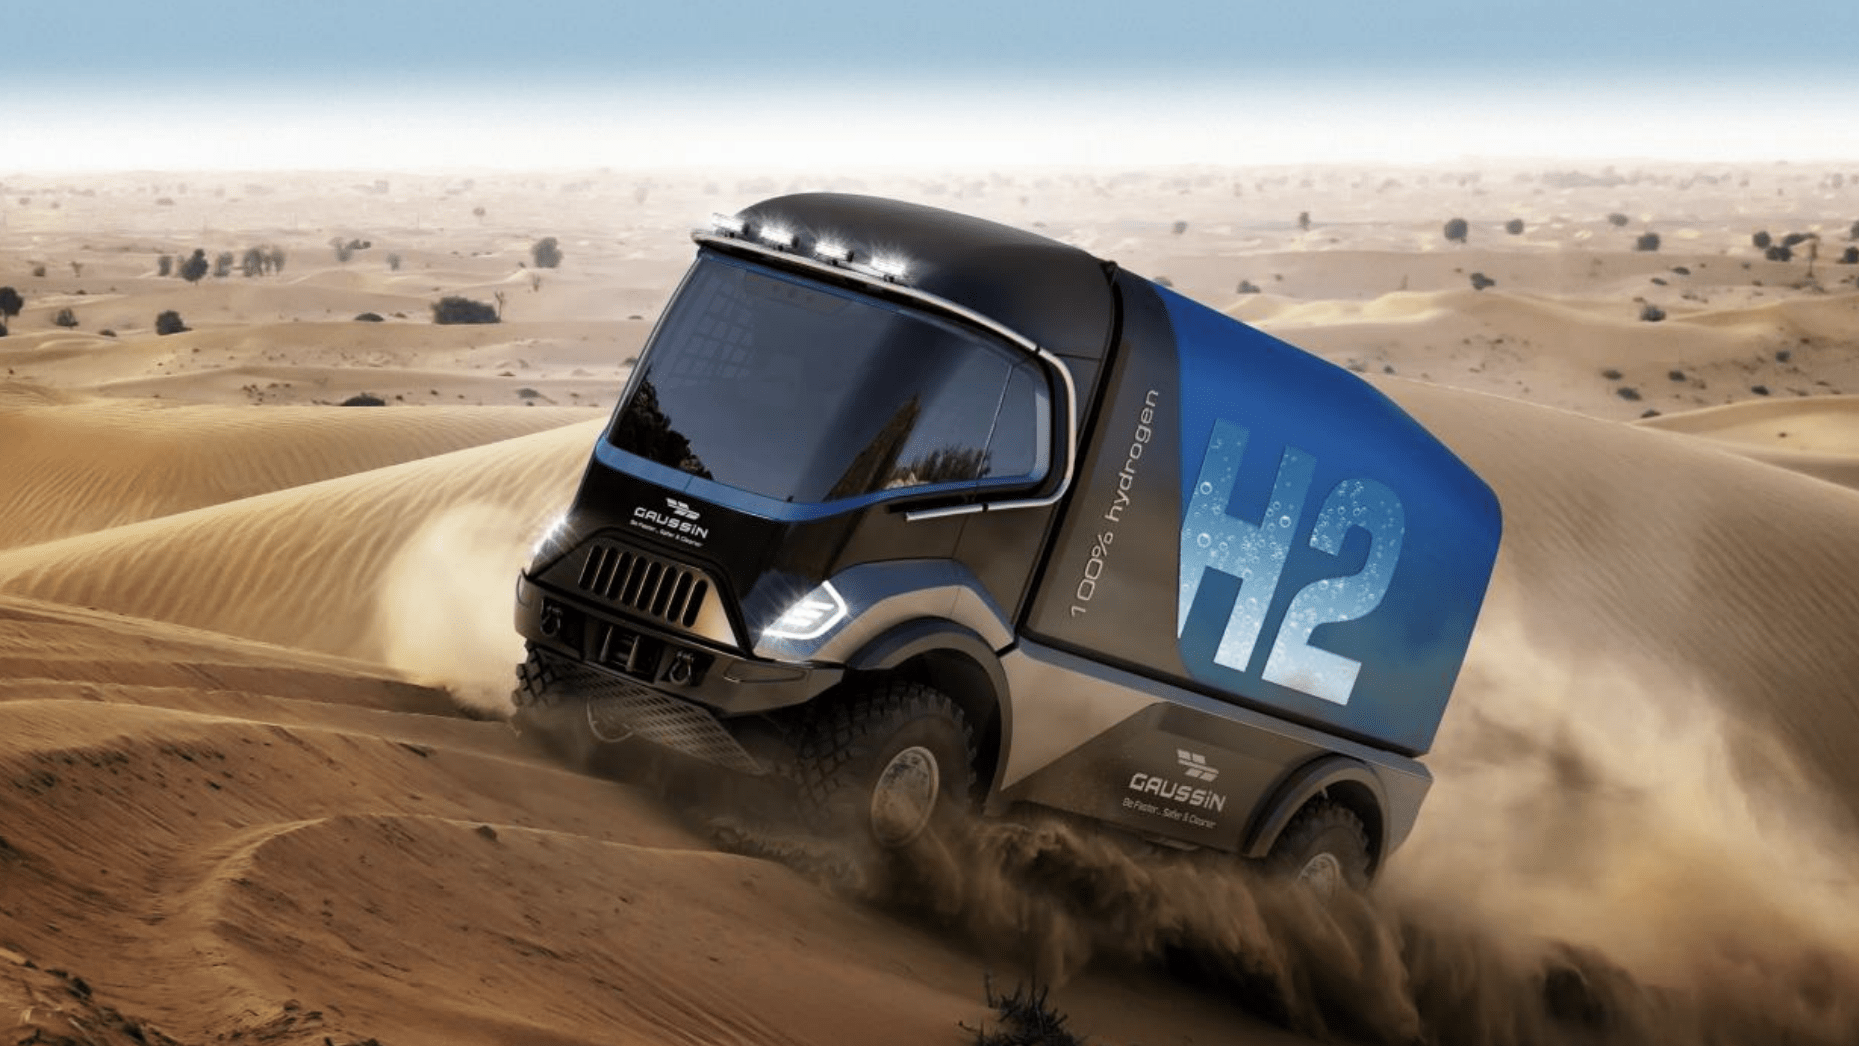 The 2022 Dakar Rally Will Test The Gaussin H2 Racing Truck, A Motorsport Behemoth Powered By Hydrogen